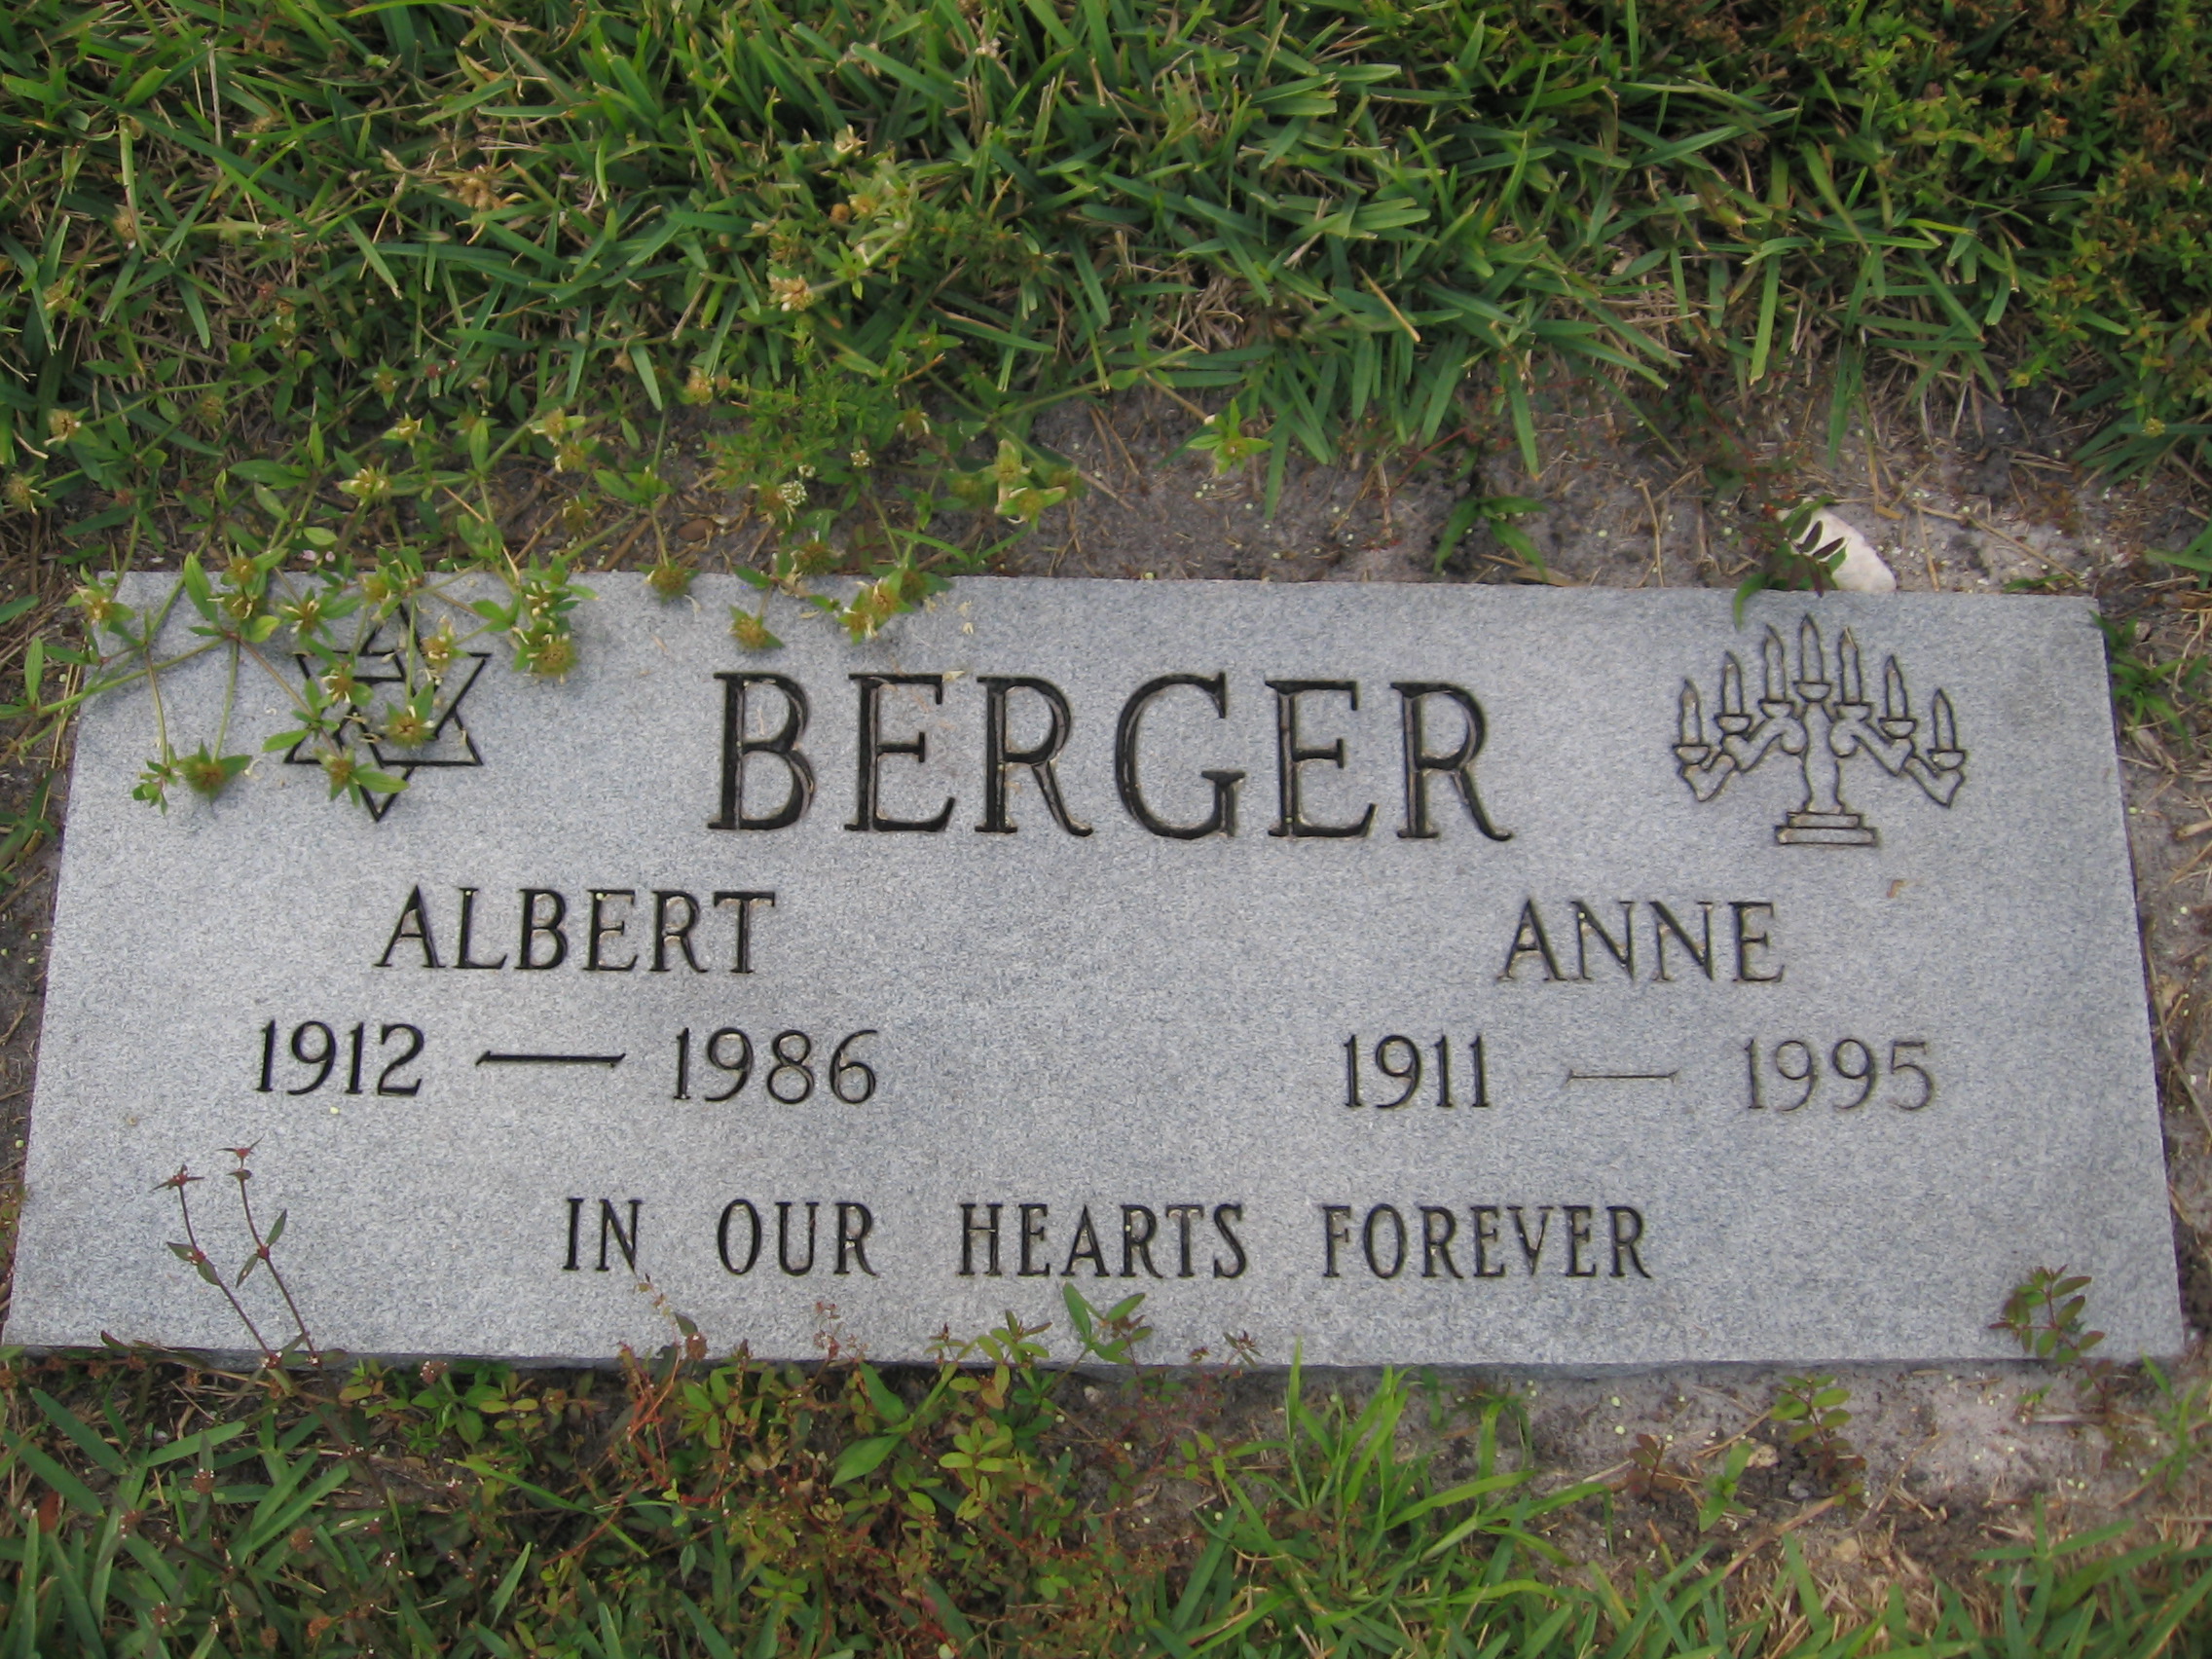 Albert Berger